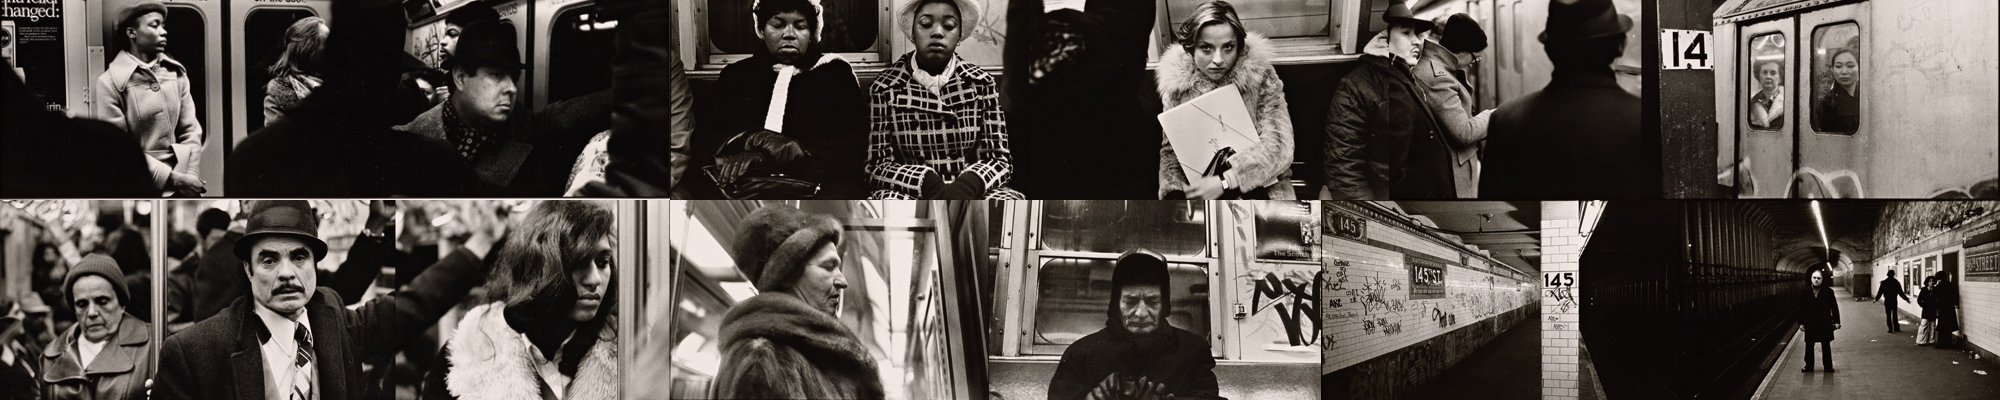 vintage pics of people on New York subway